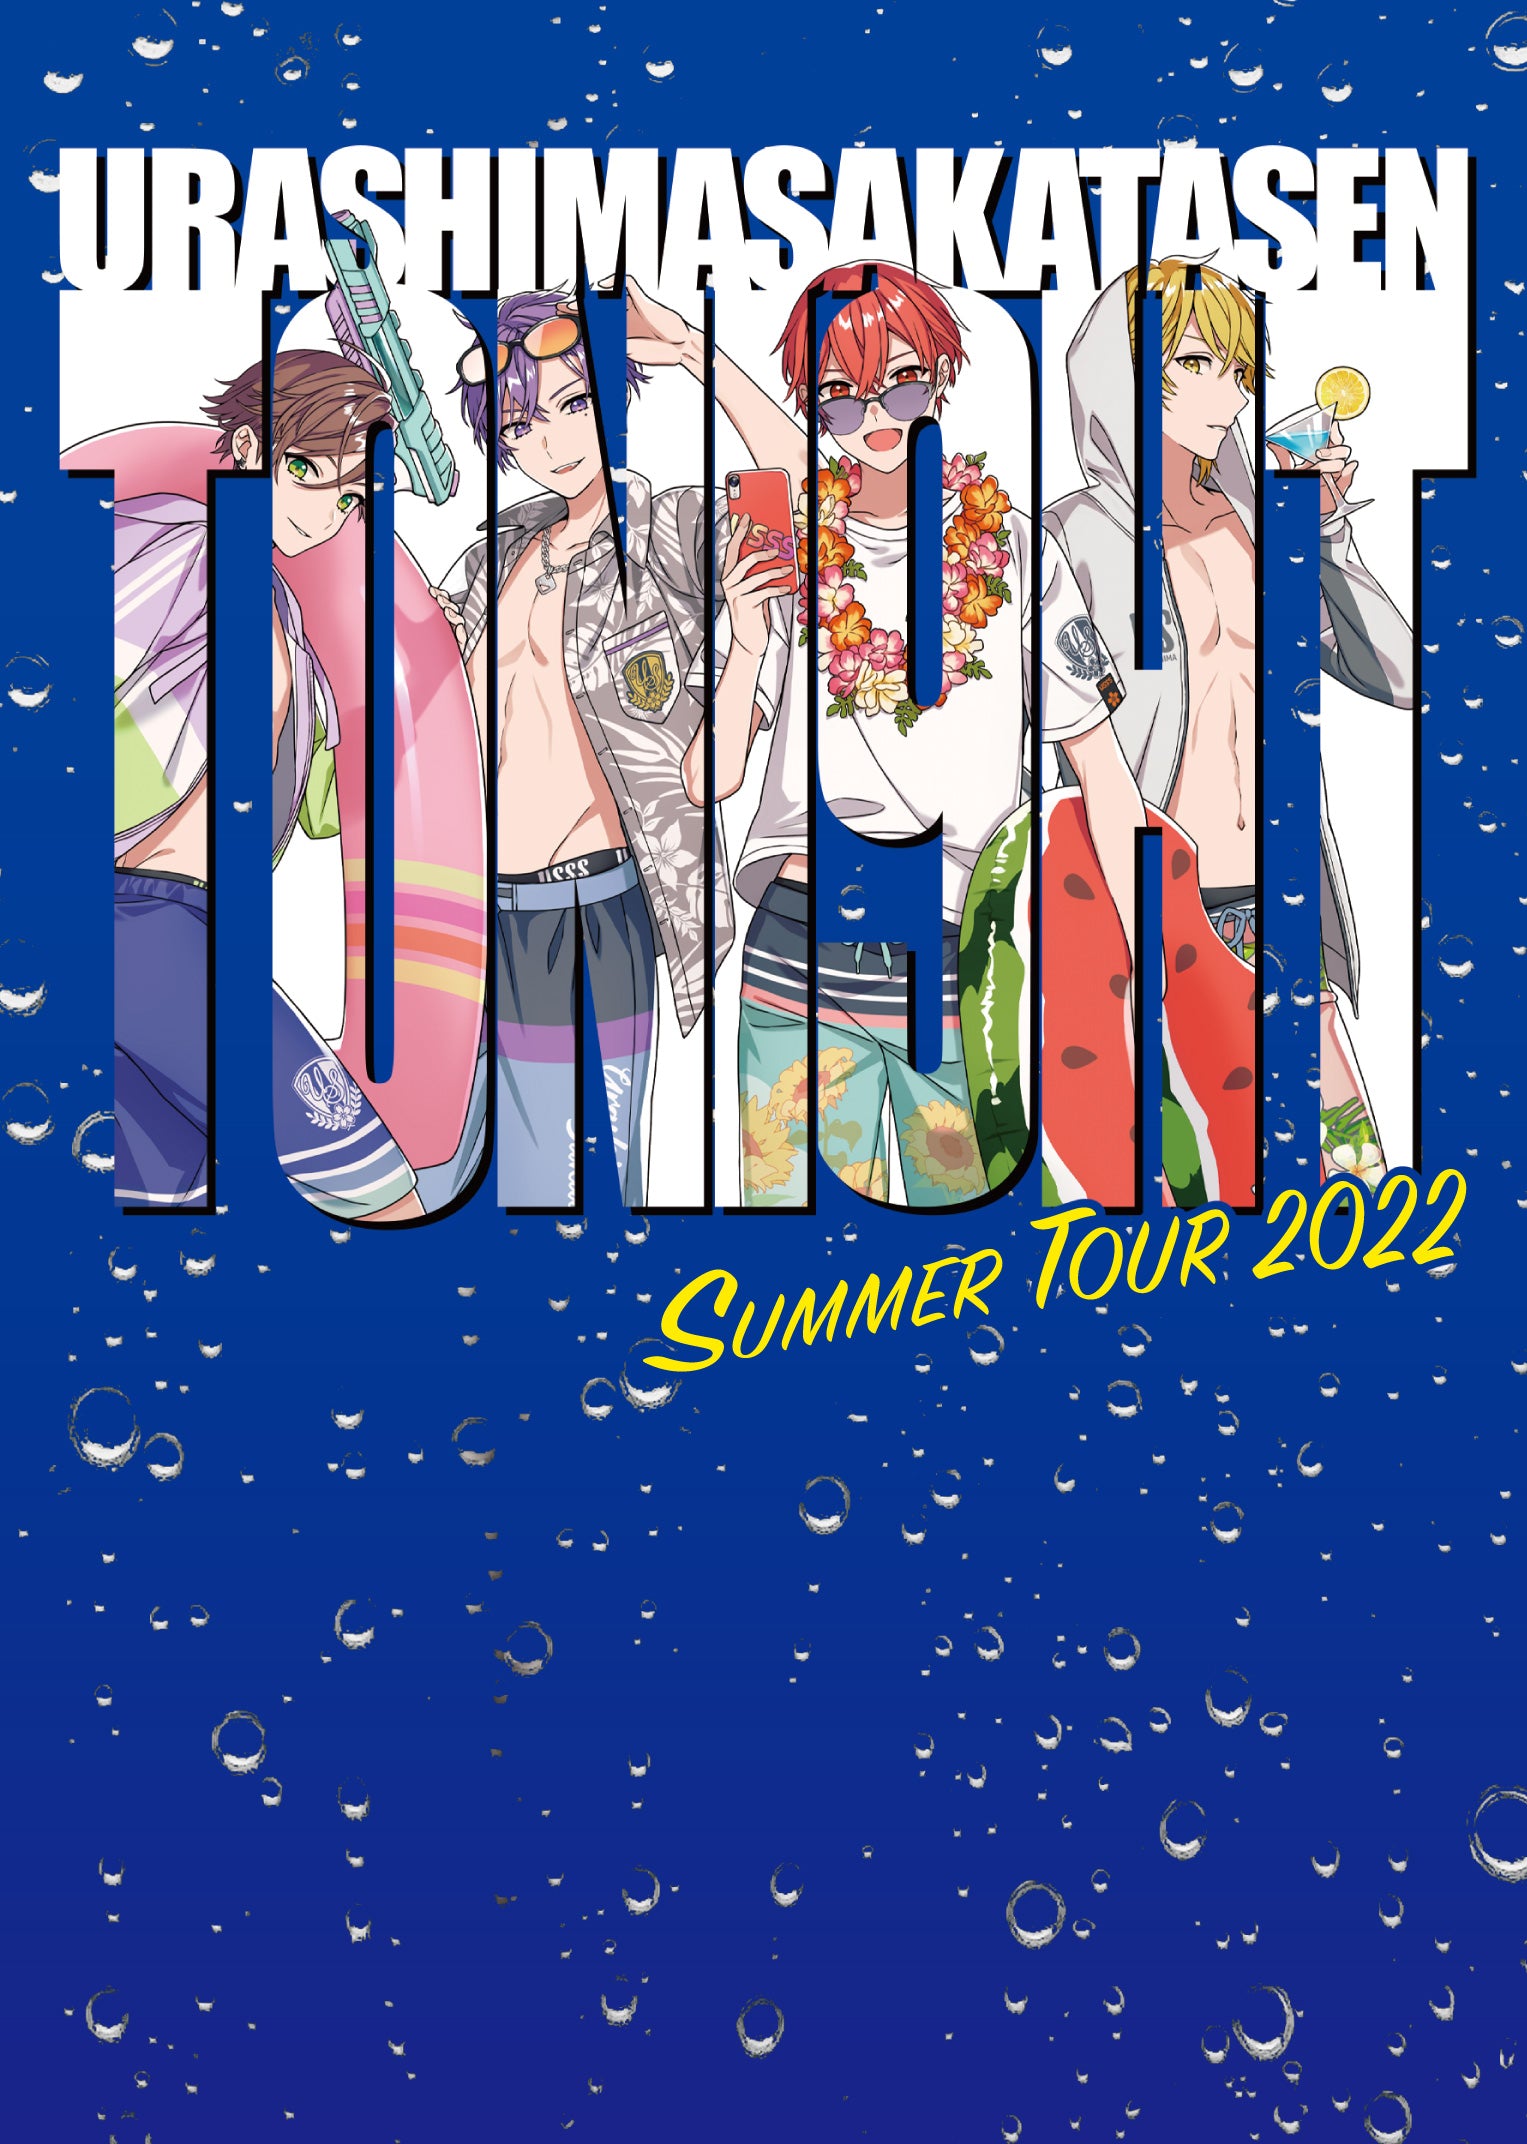 【DVD】「浦島坂田船 SUMMER TOUR 2022 Toni9ht」ライブDVD